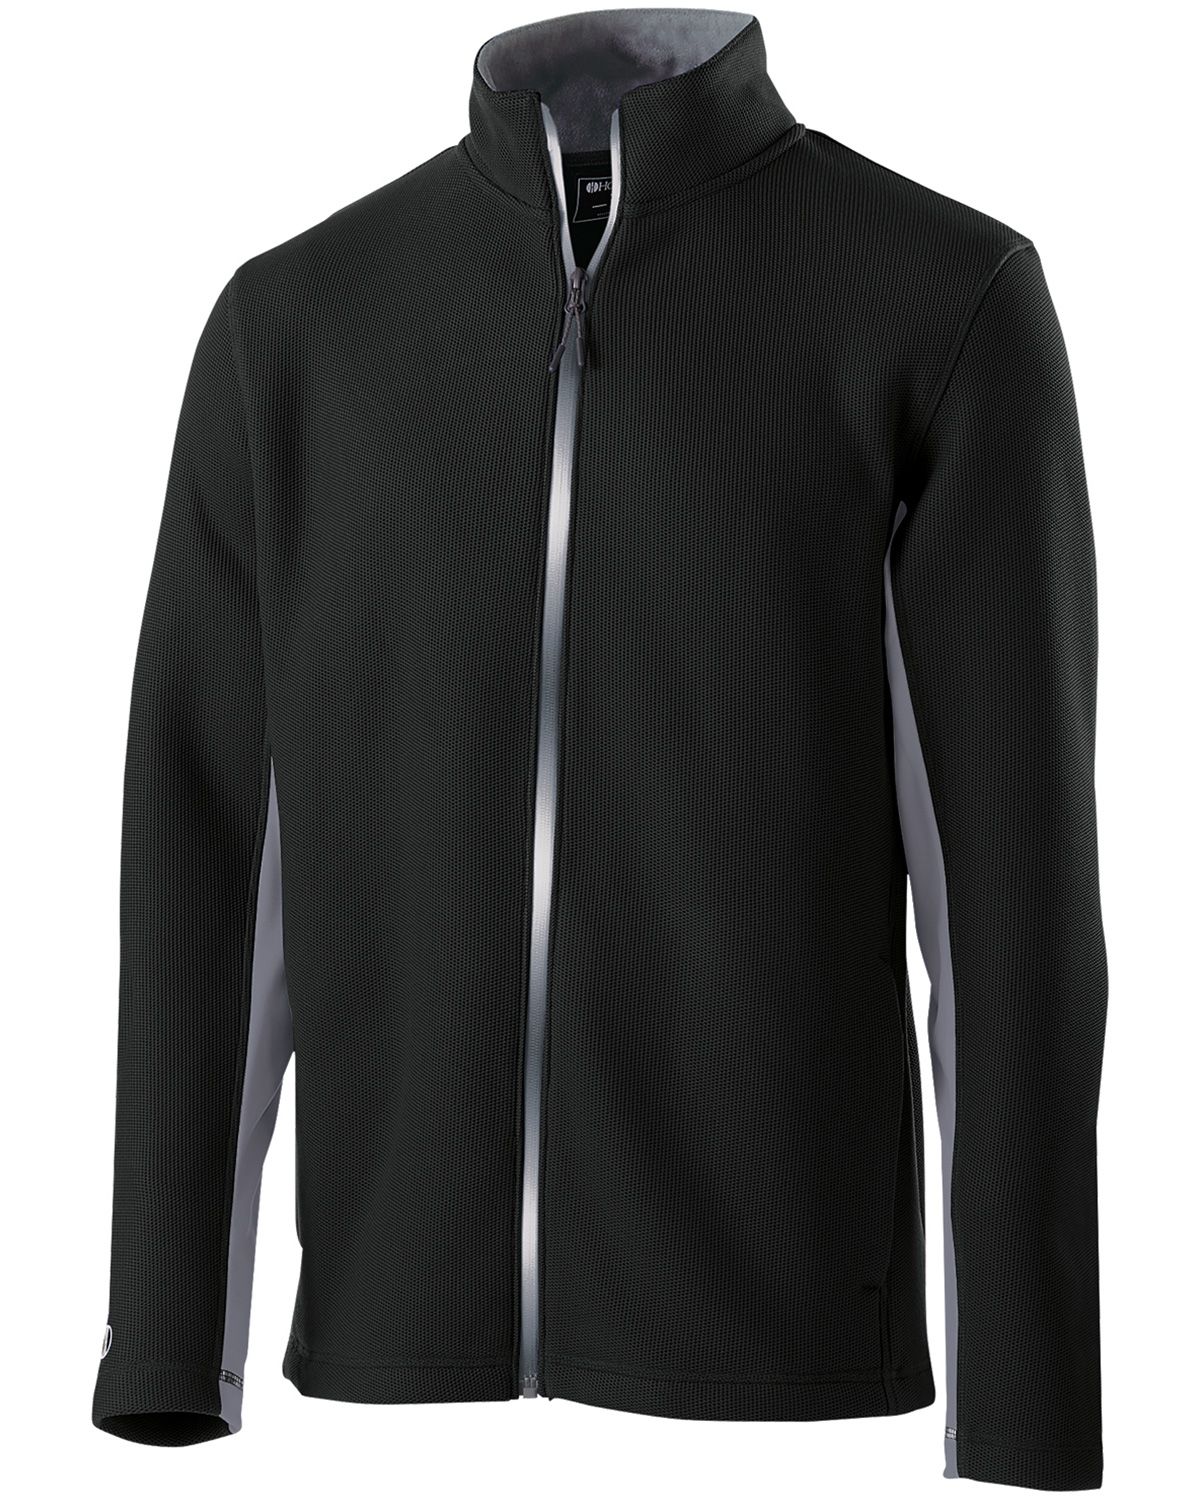 Augusta Sportswear 229540 Unisex Invert Jacket